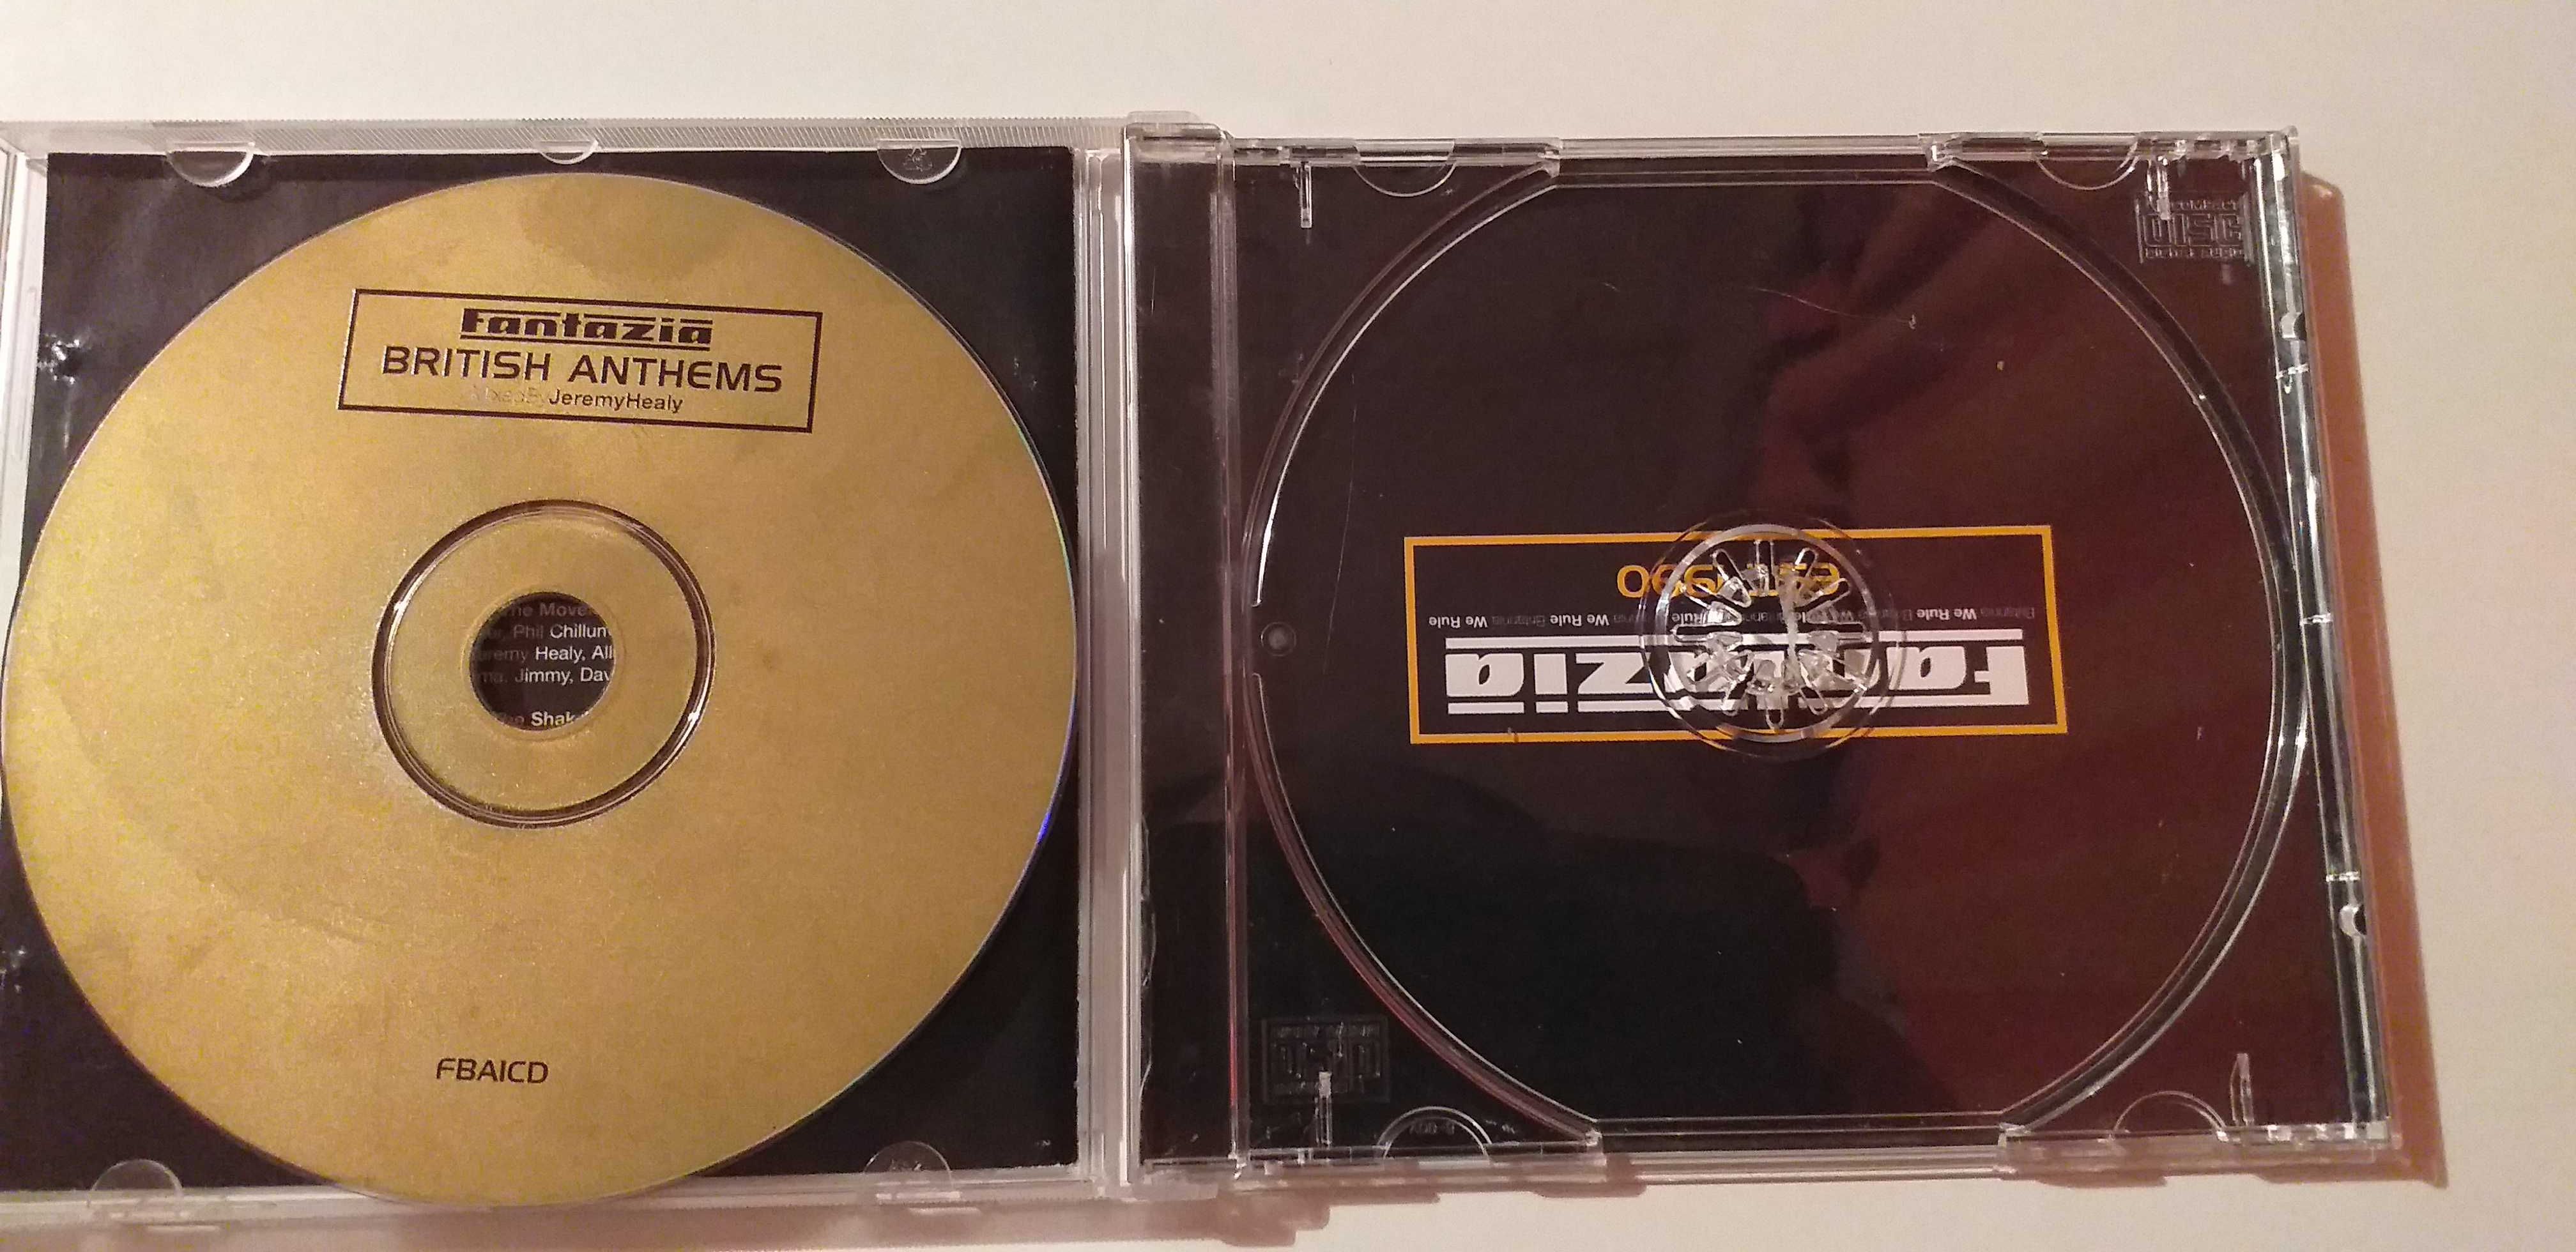 DJ Jeremy Healy - " Fantazia - British Anthems " - CD - portes incl.